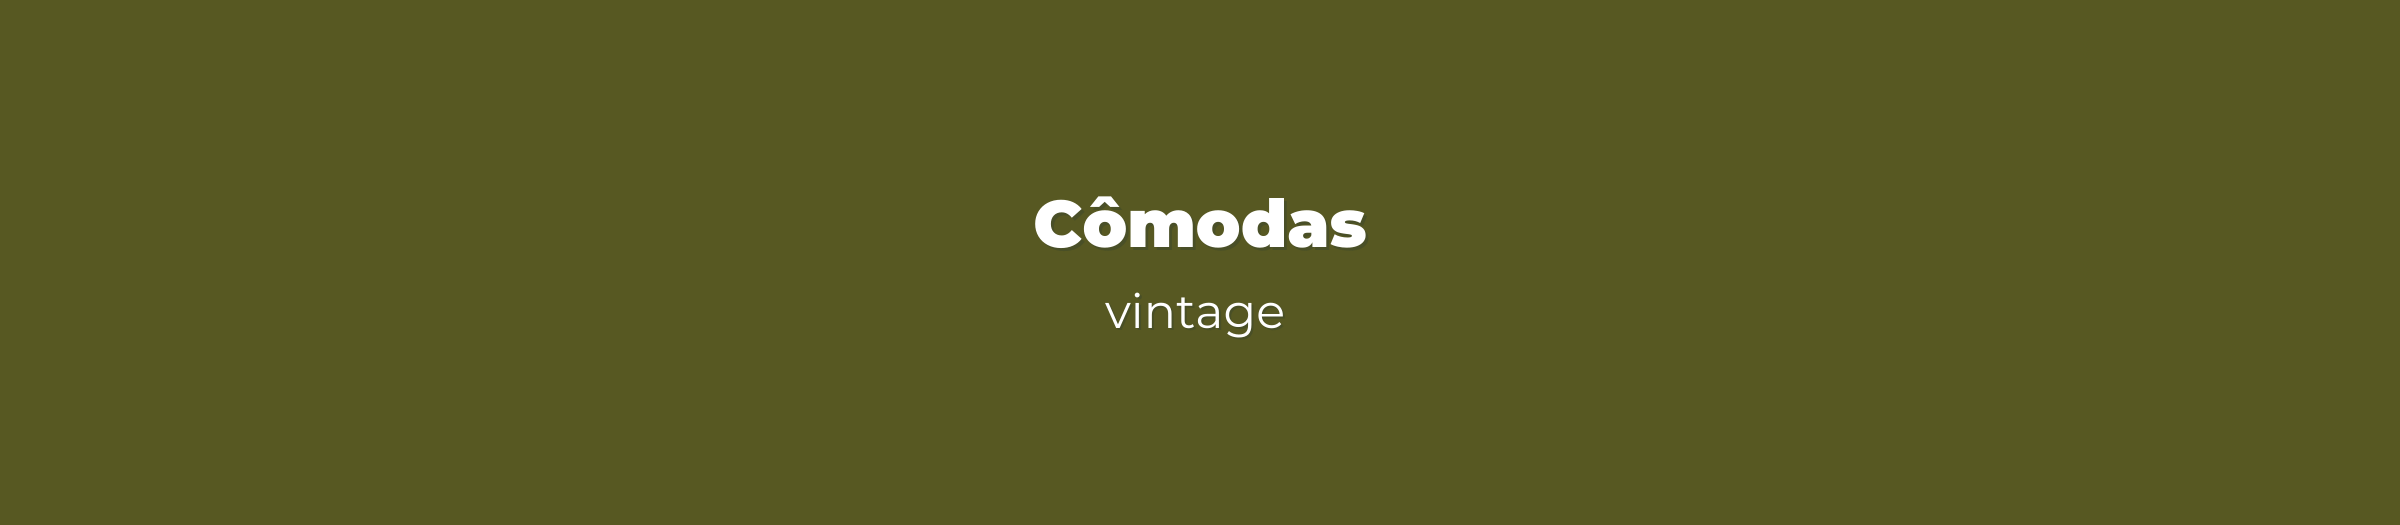 Cômodas Vintage